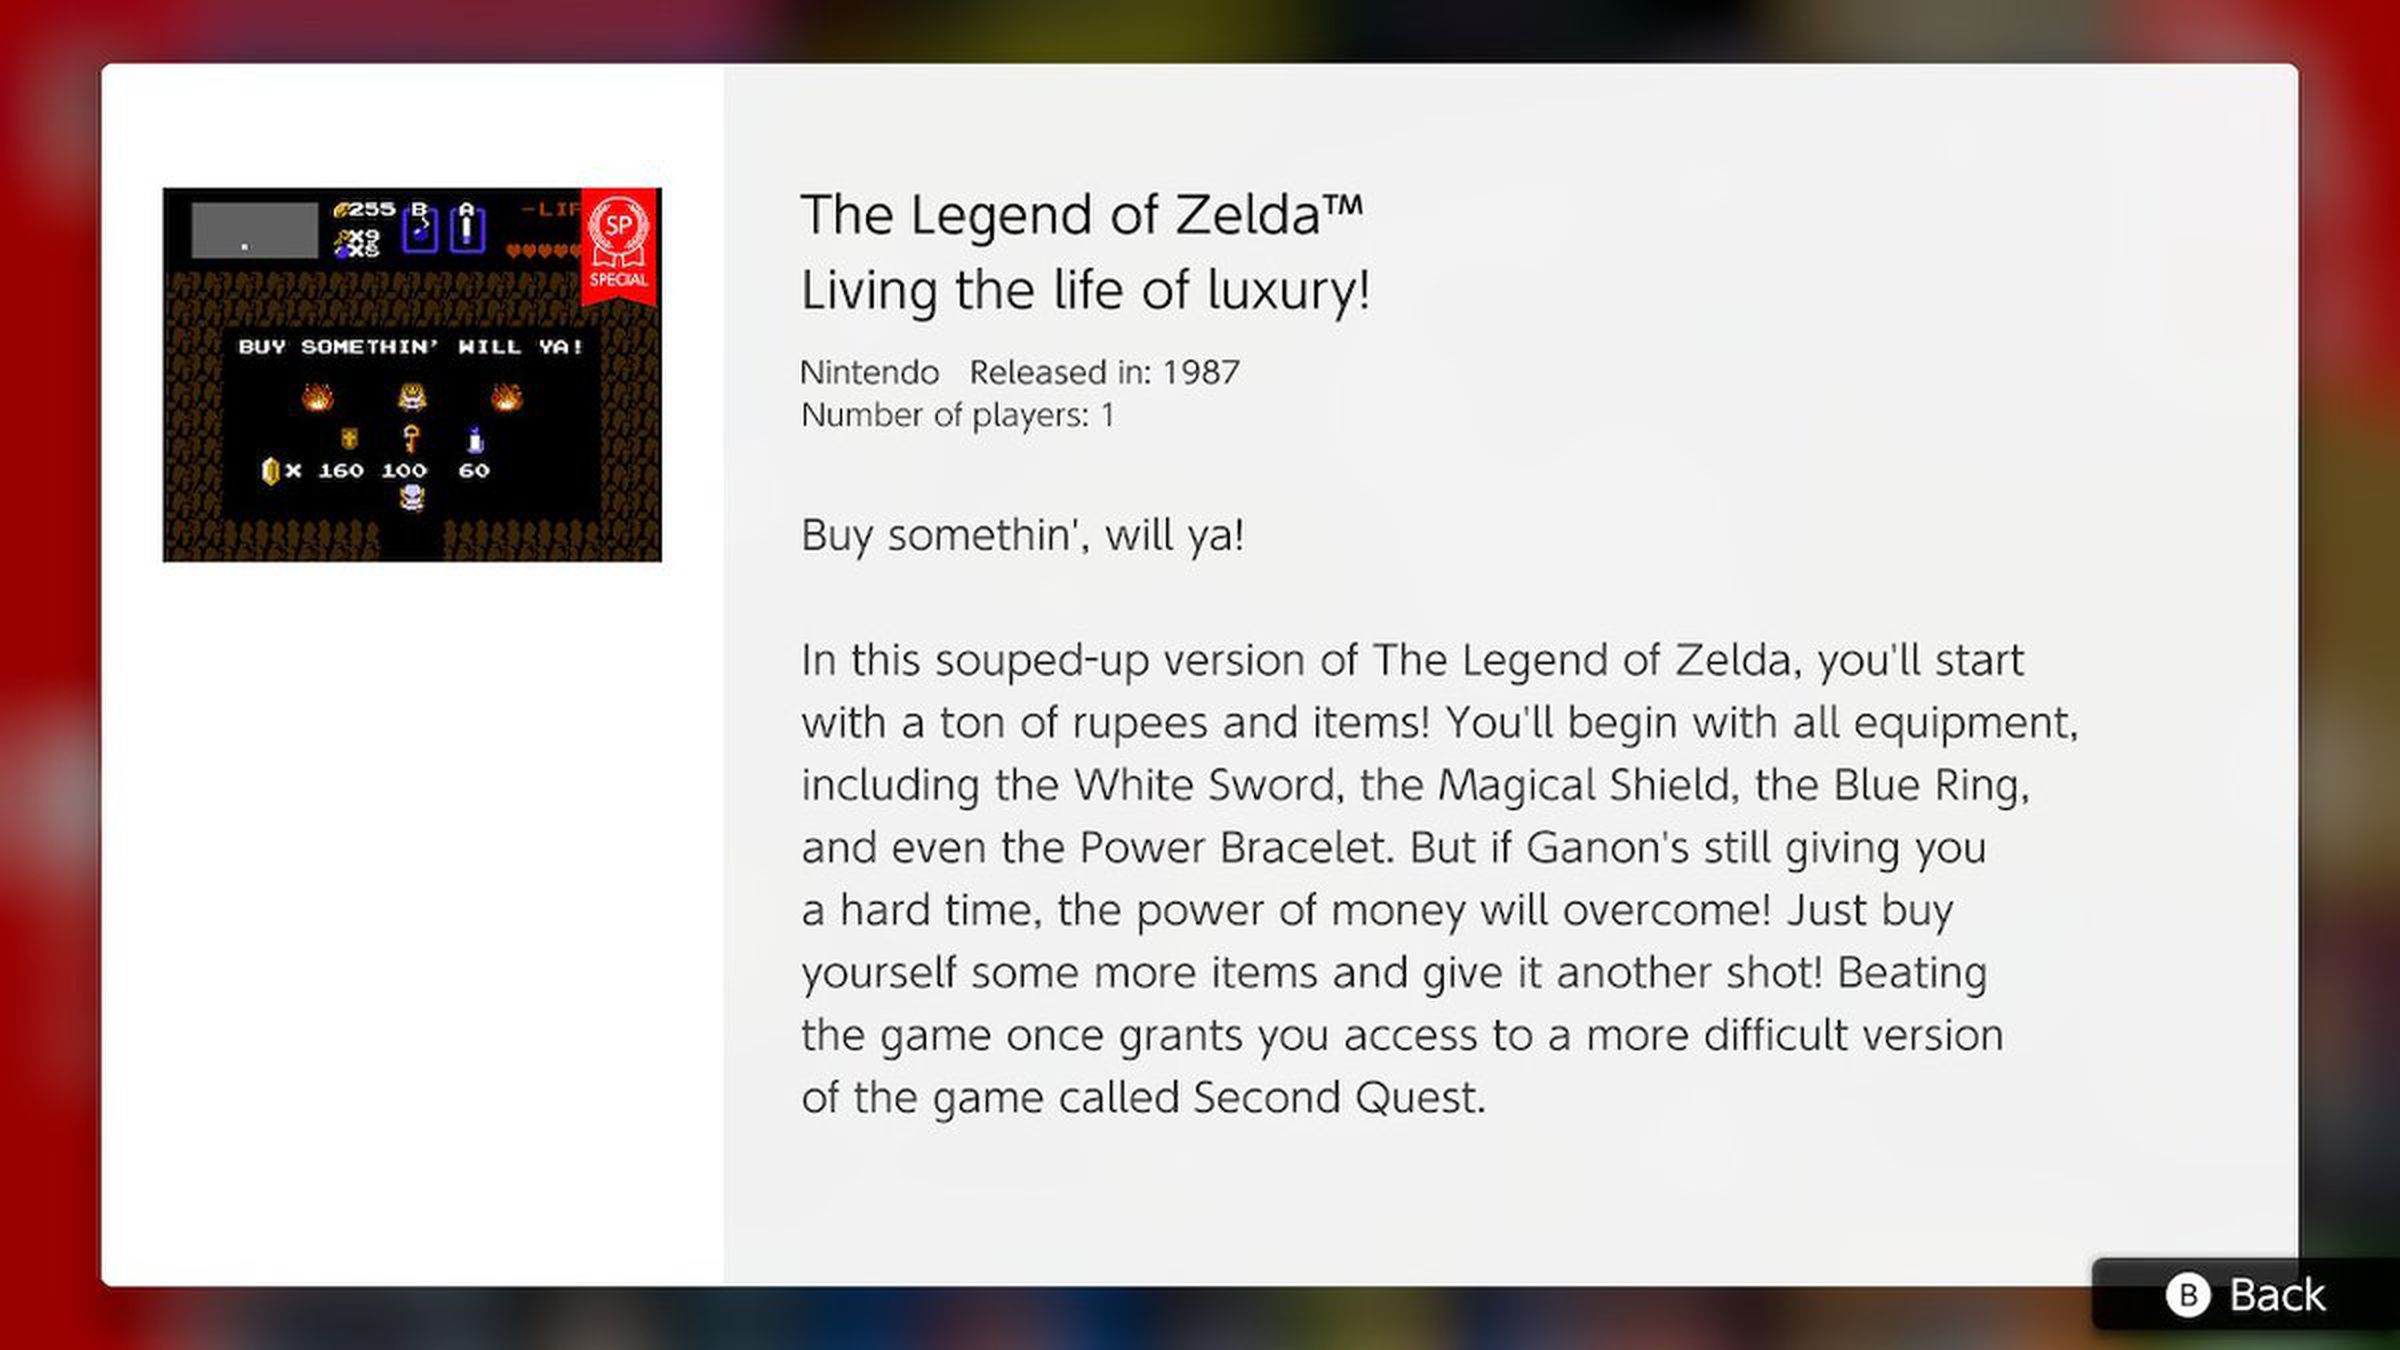 The Legend of Zelda: Living the life of luxury!